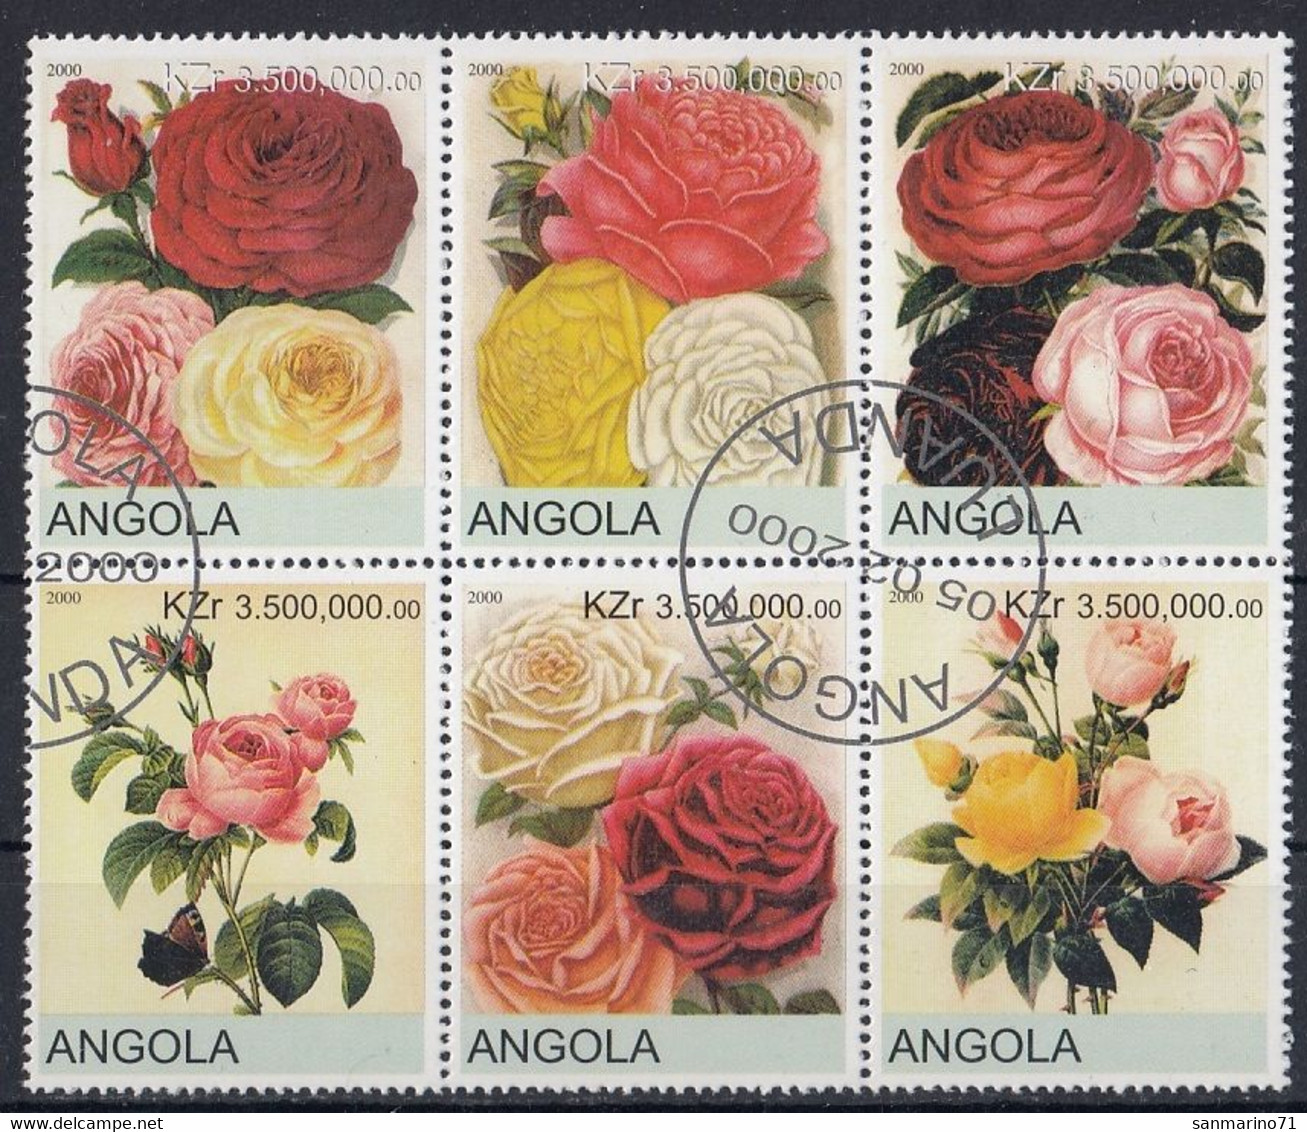 ANGOLA Roses 1,used - Rose